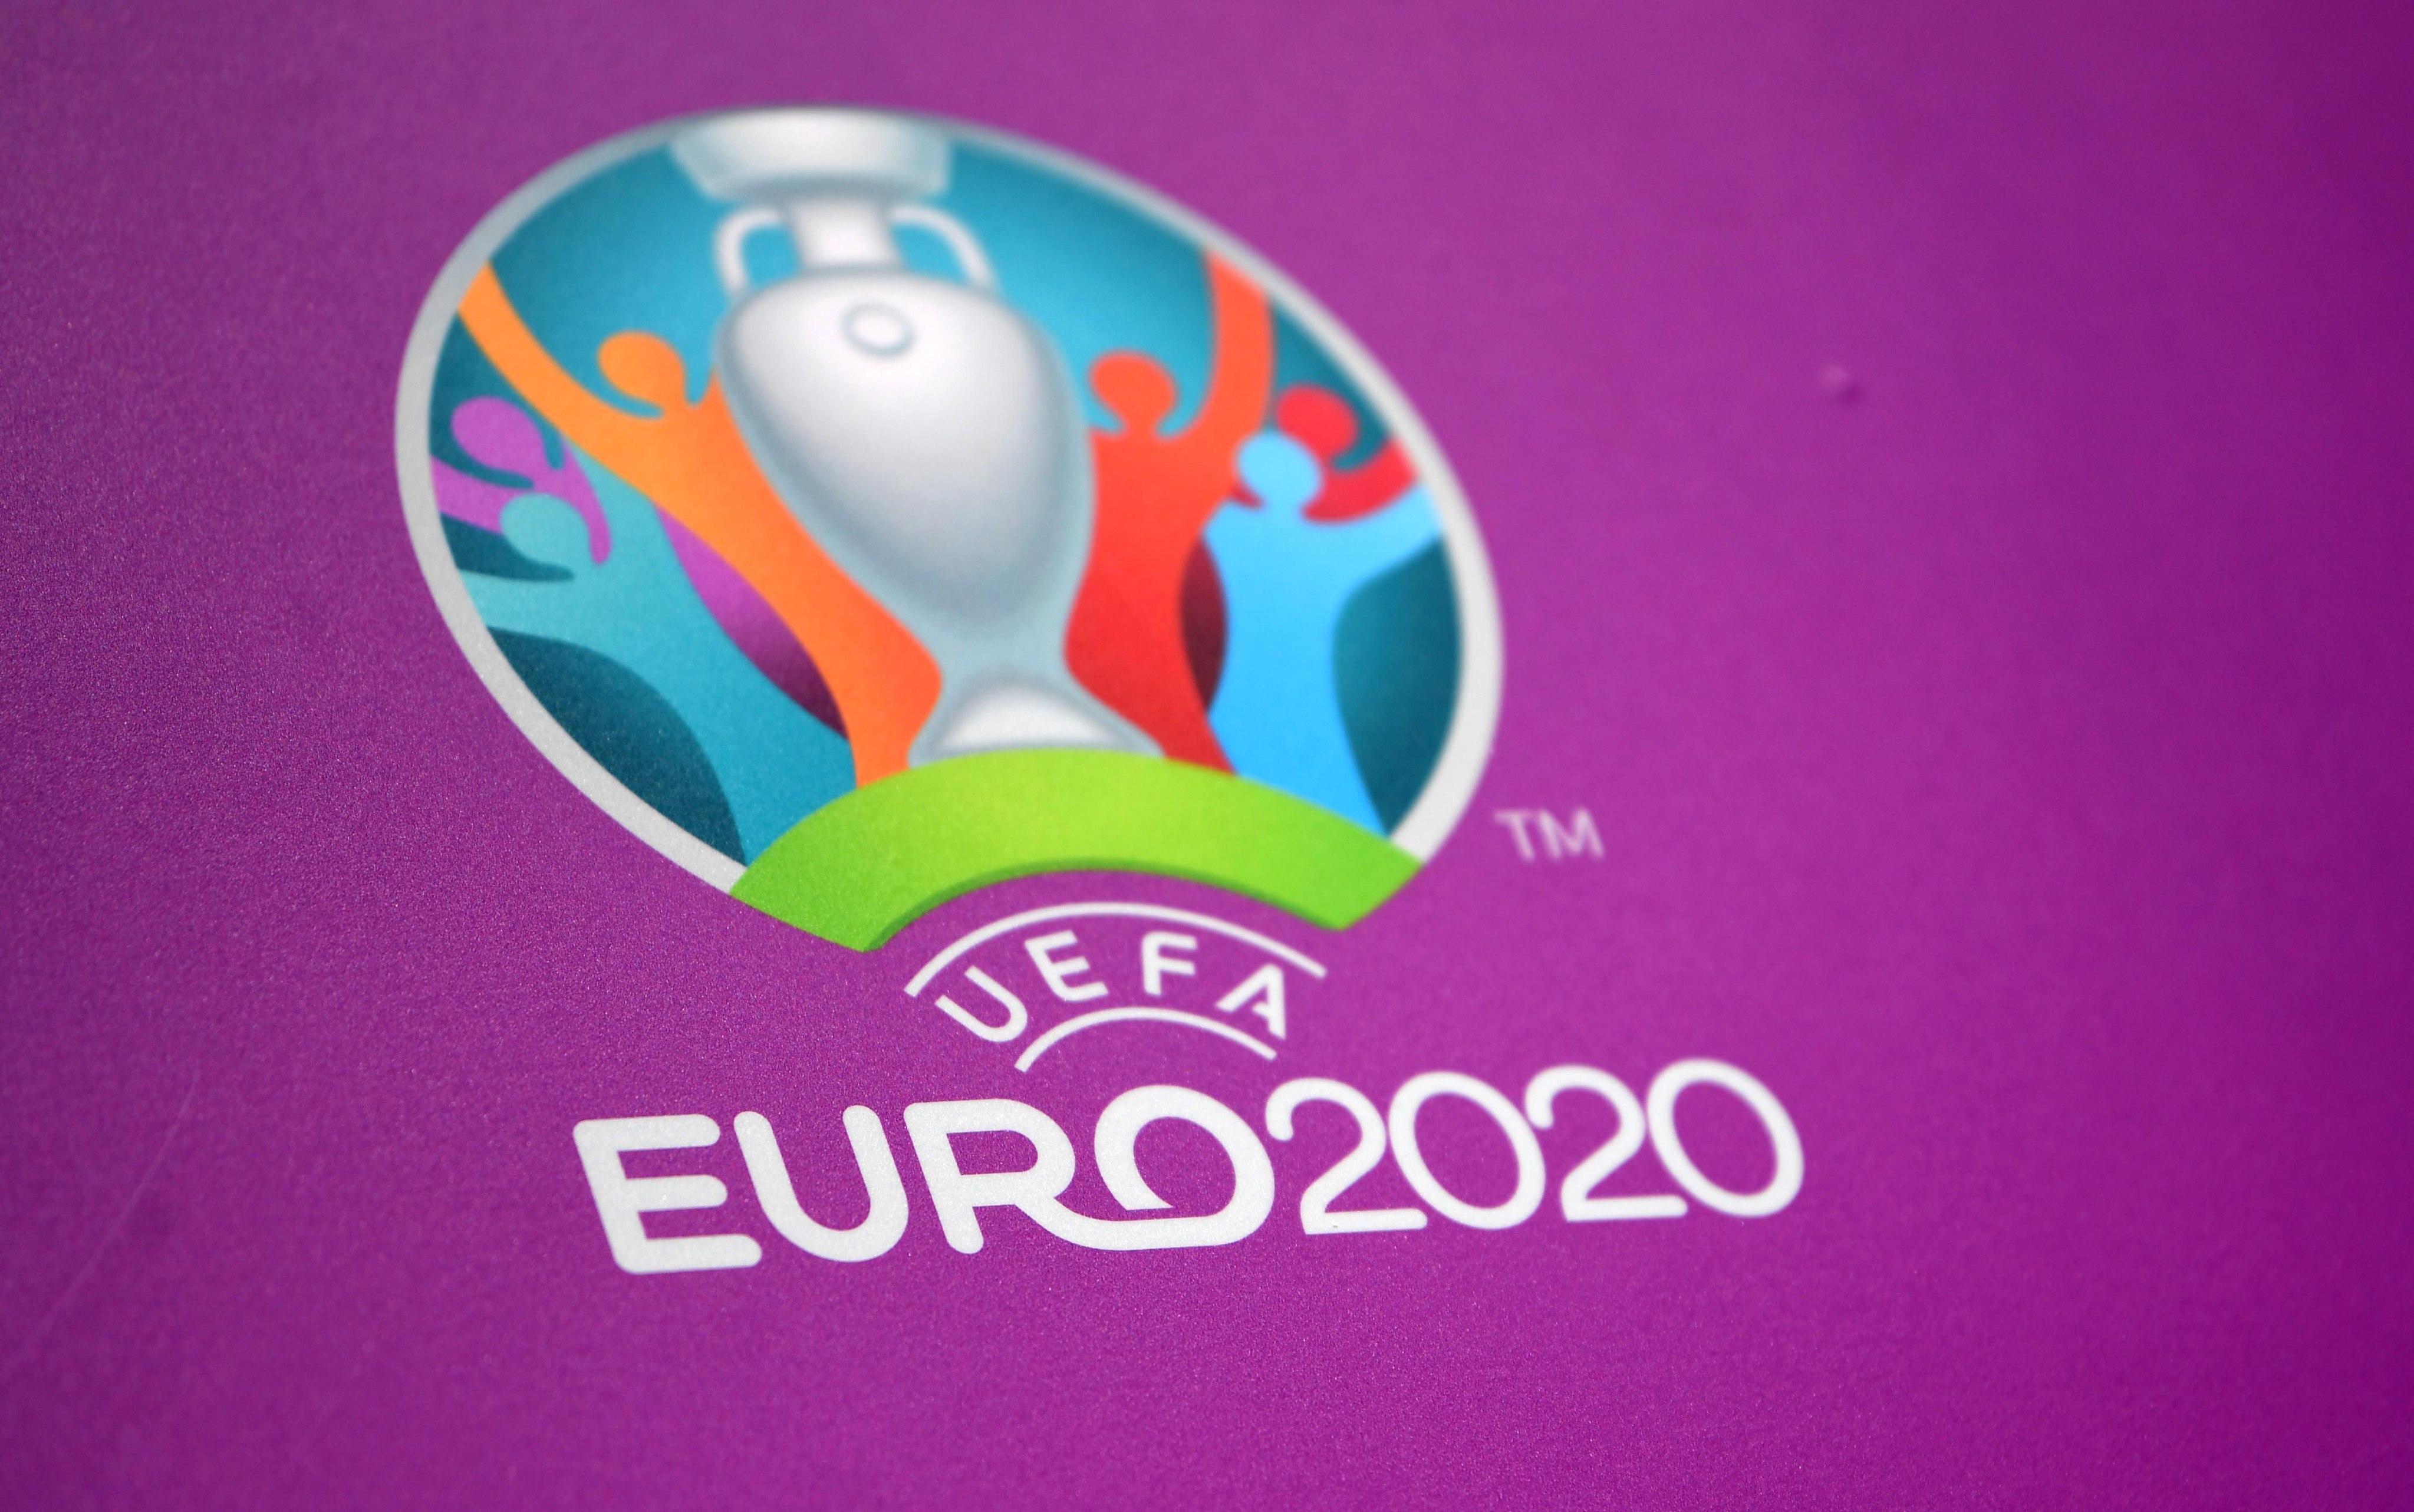 The Uefa Euro 2020 logo is displayed at Wembley Stadium in London. Photo: EPA